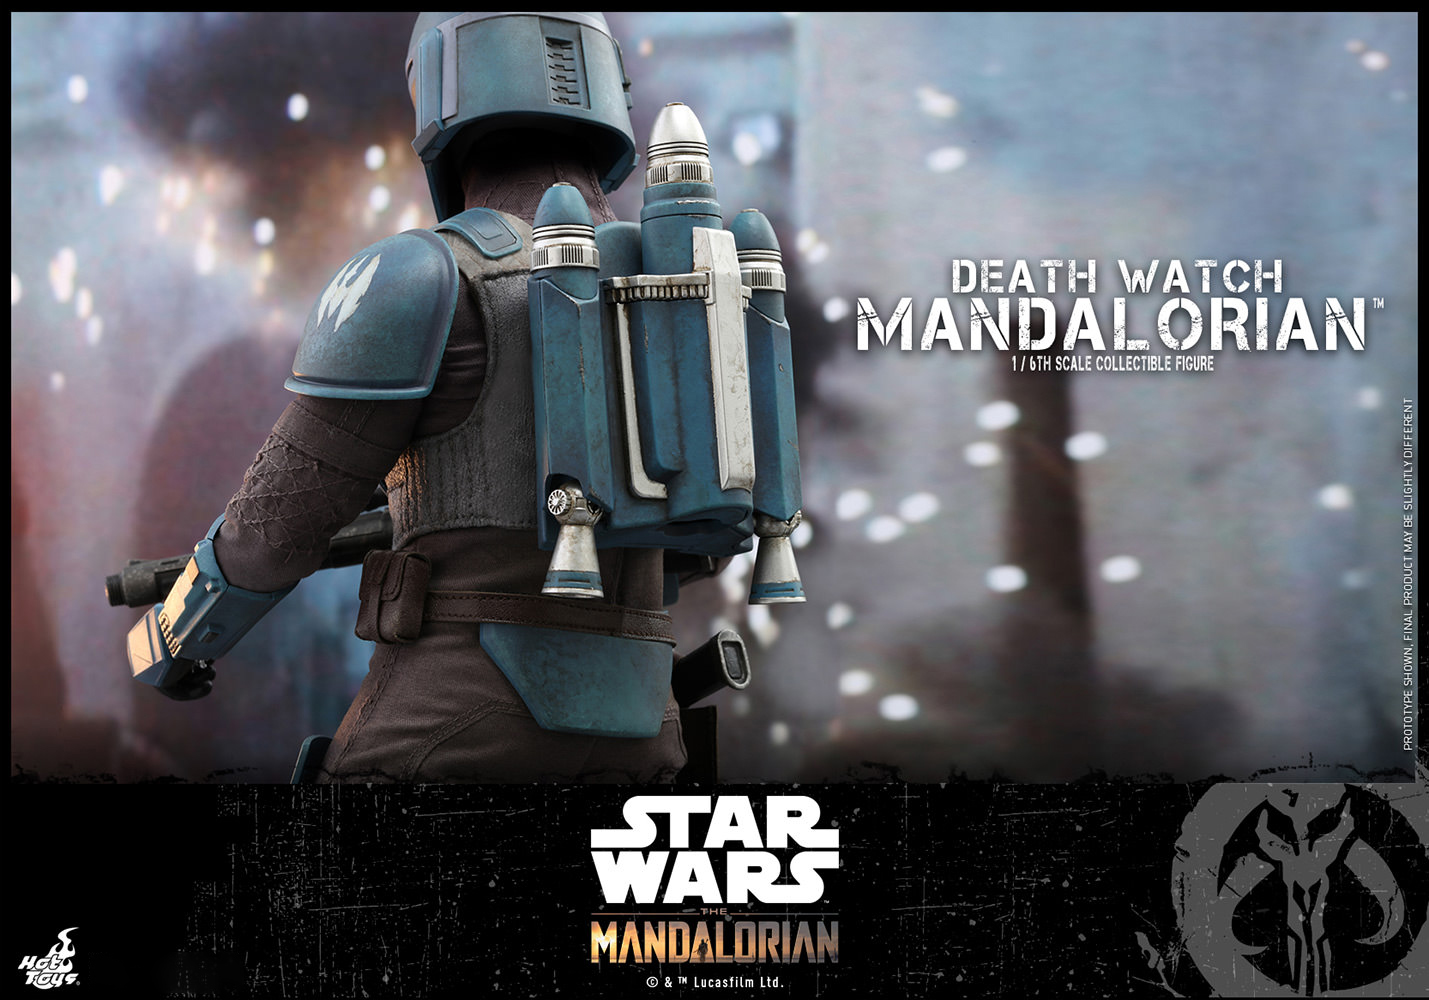 Star Wars: The Mandalorian - Death Watch Mandalorian